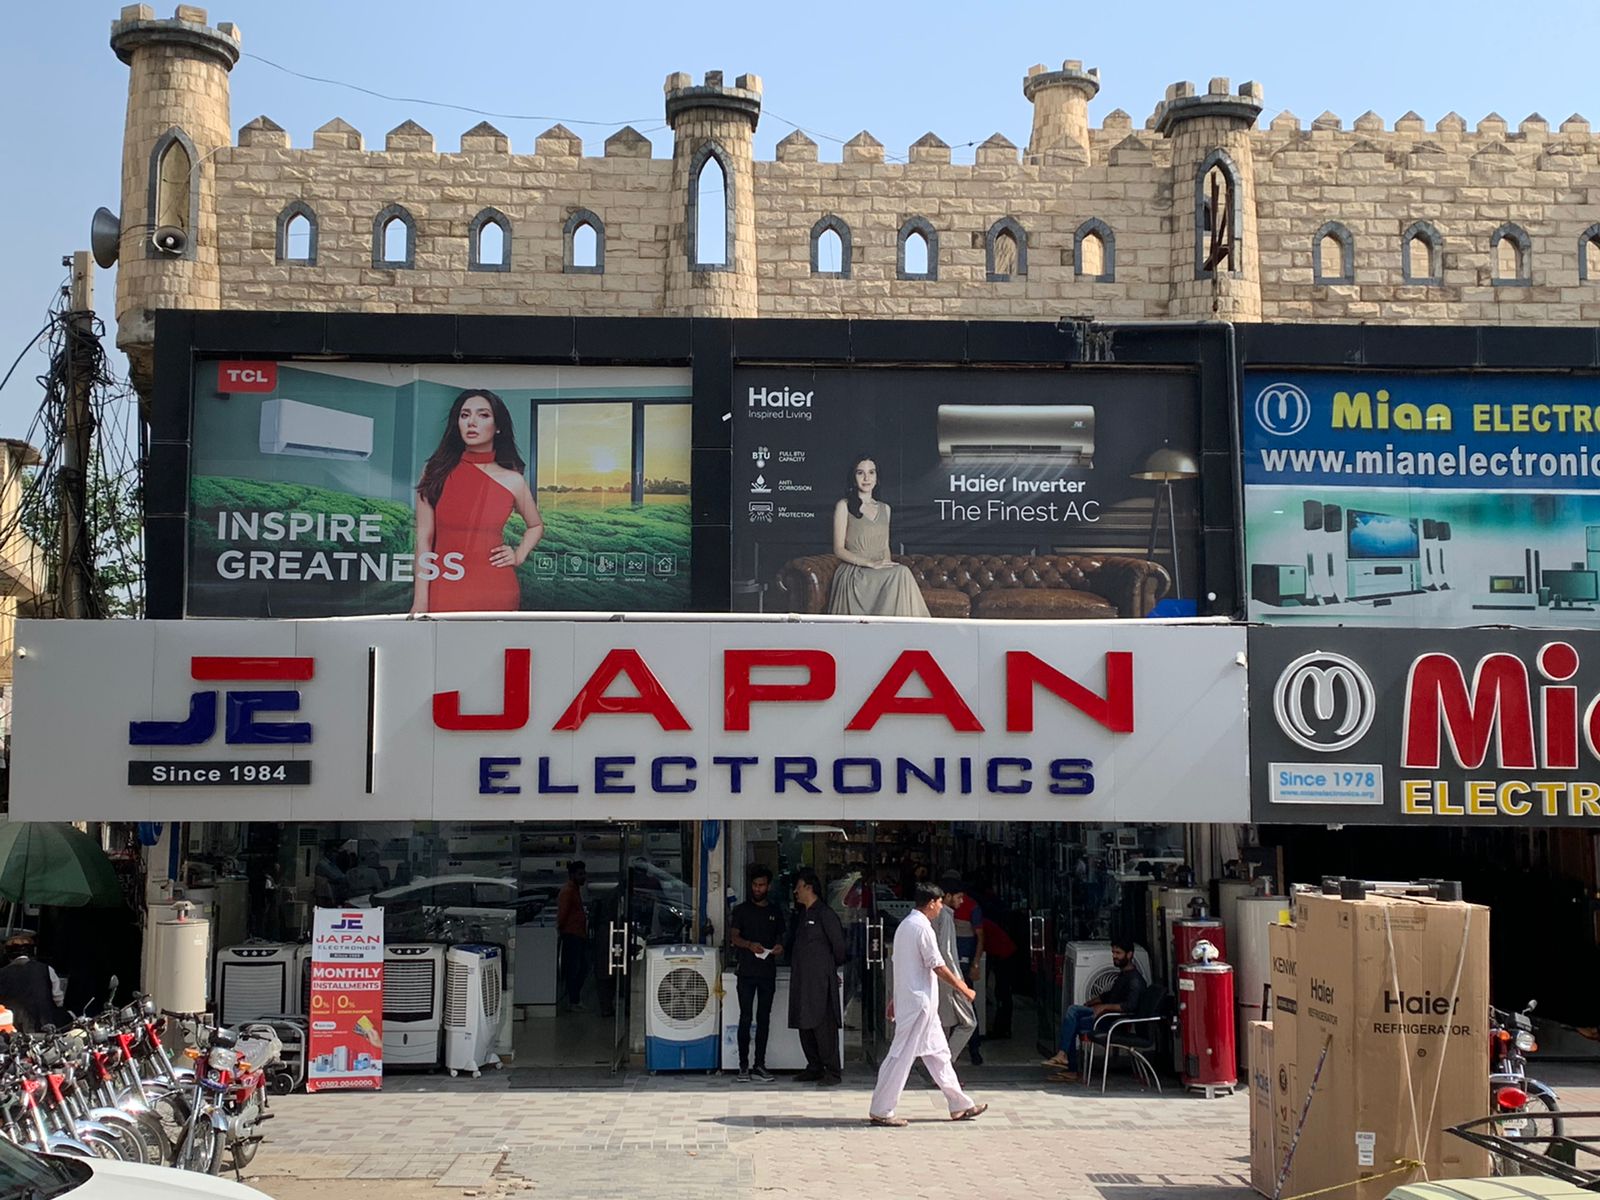 Japan Electronics Murree Road